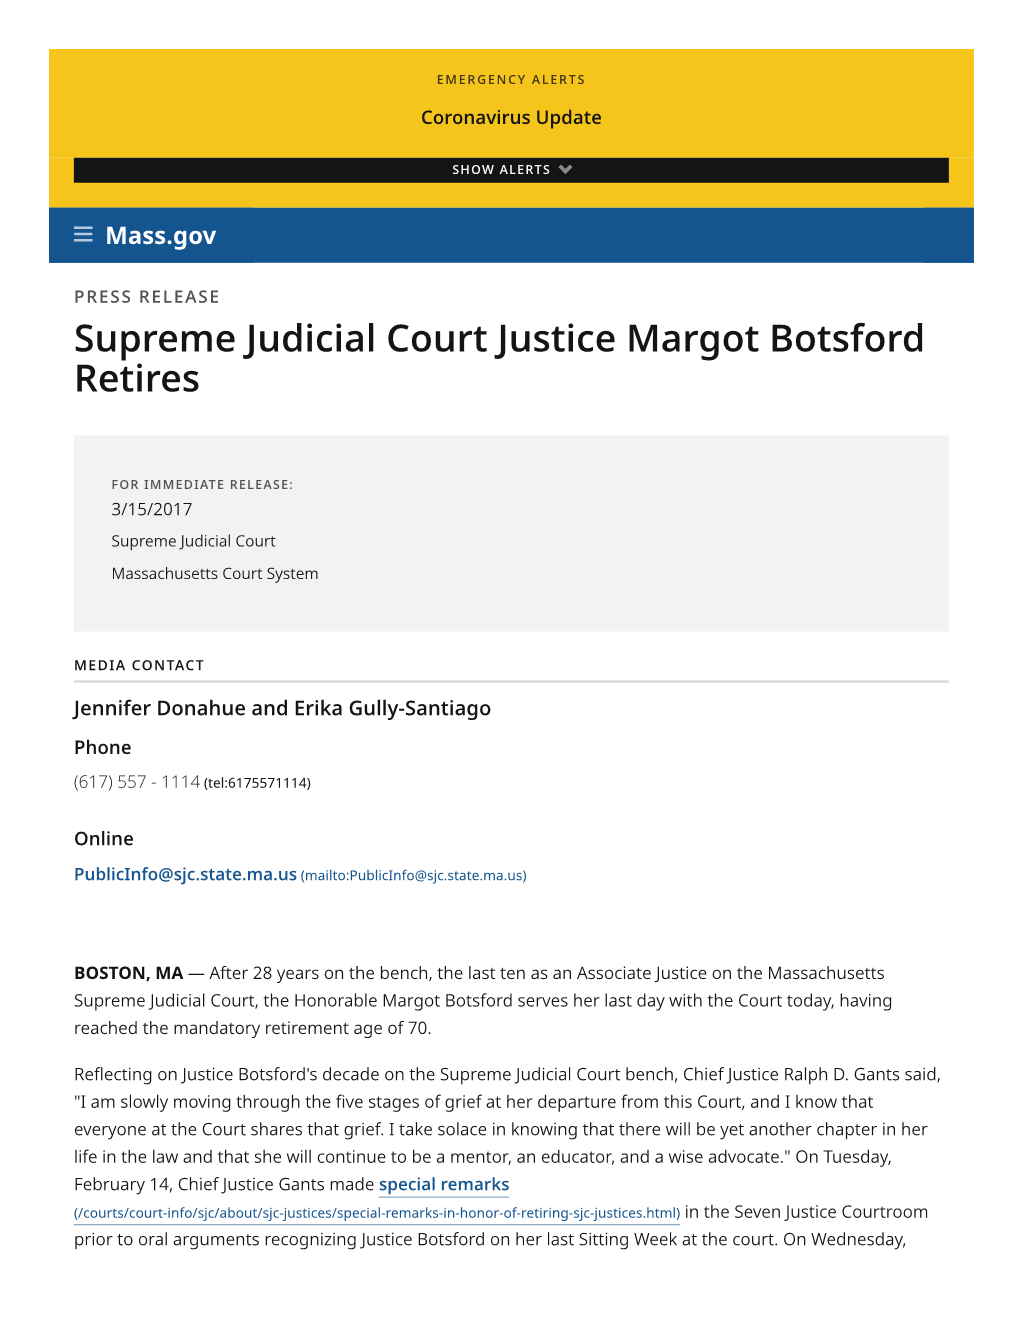 Supreme Judicial Court Justice Margot Botsford Retires